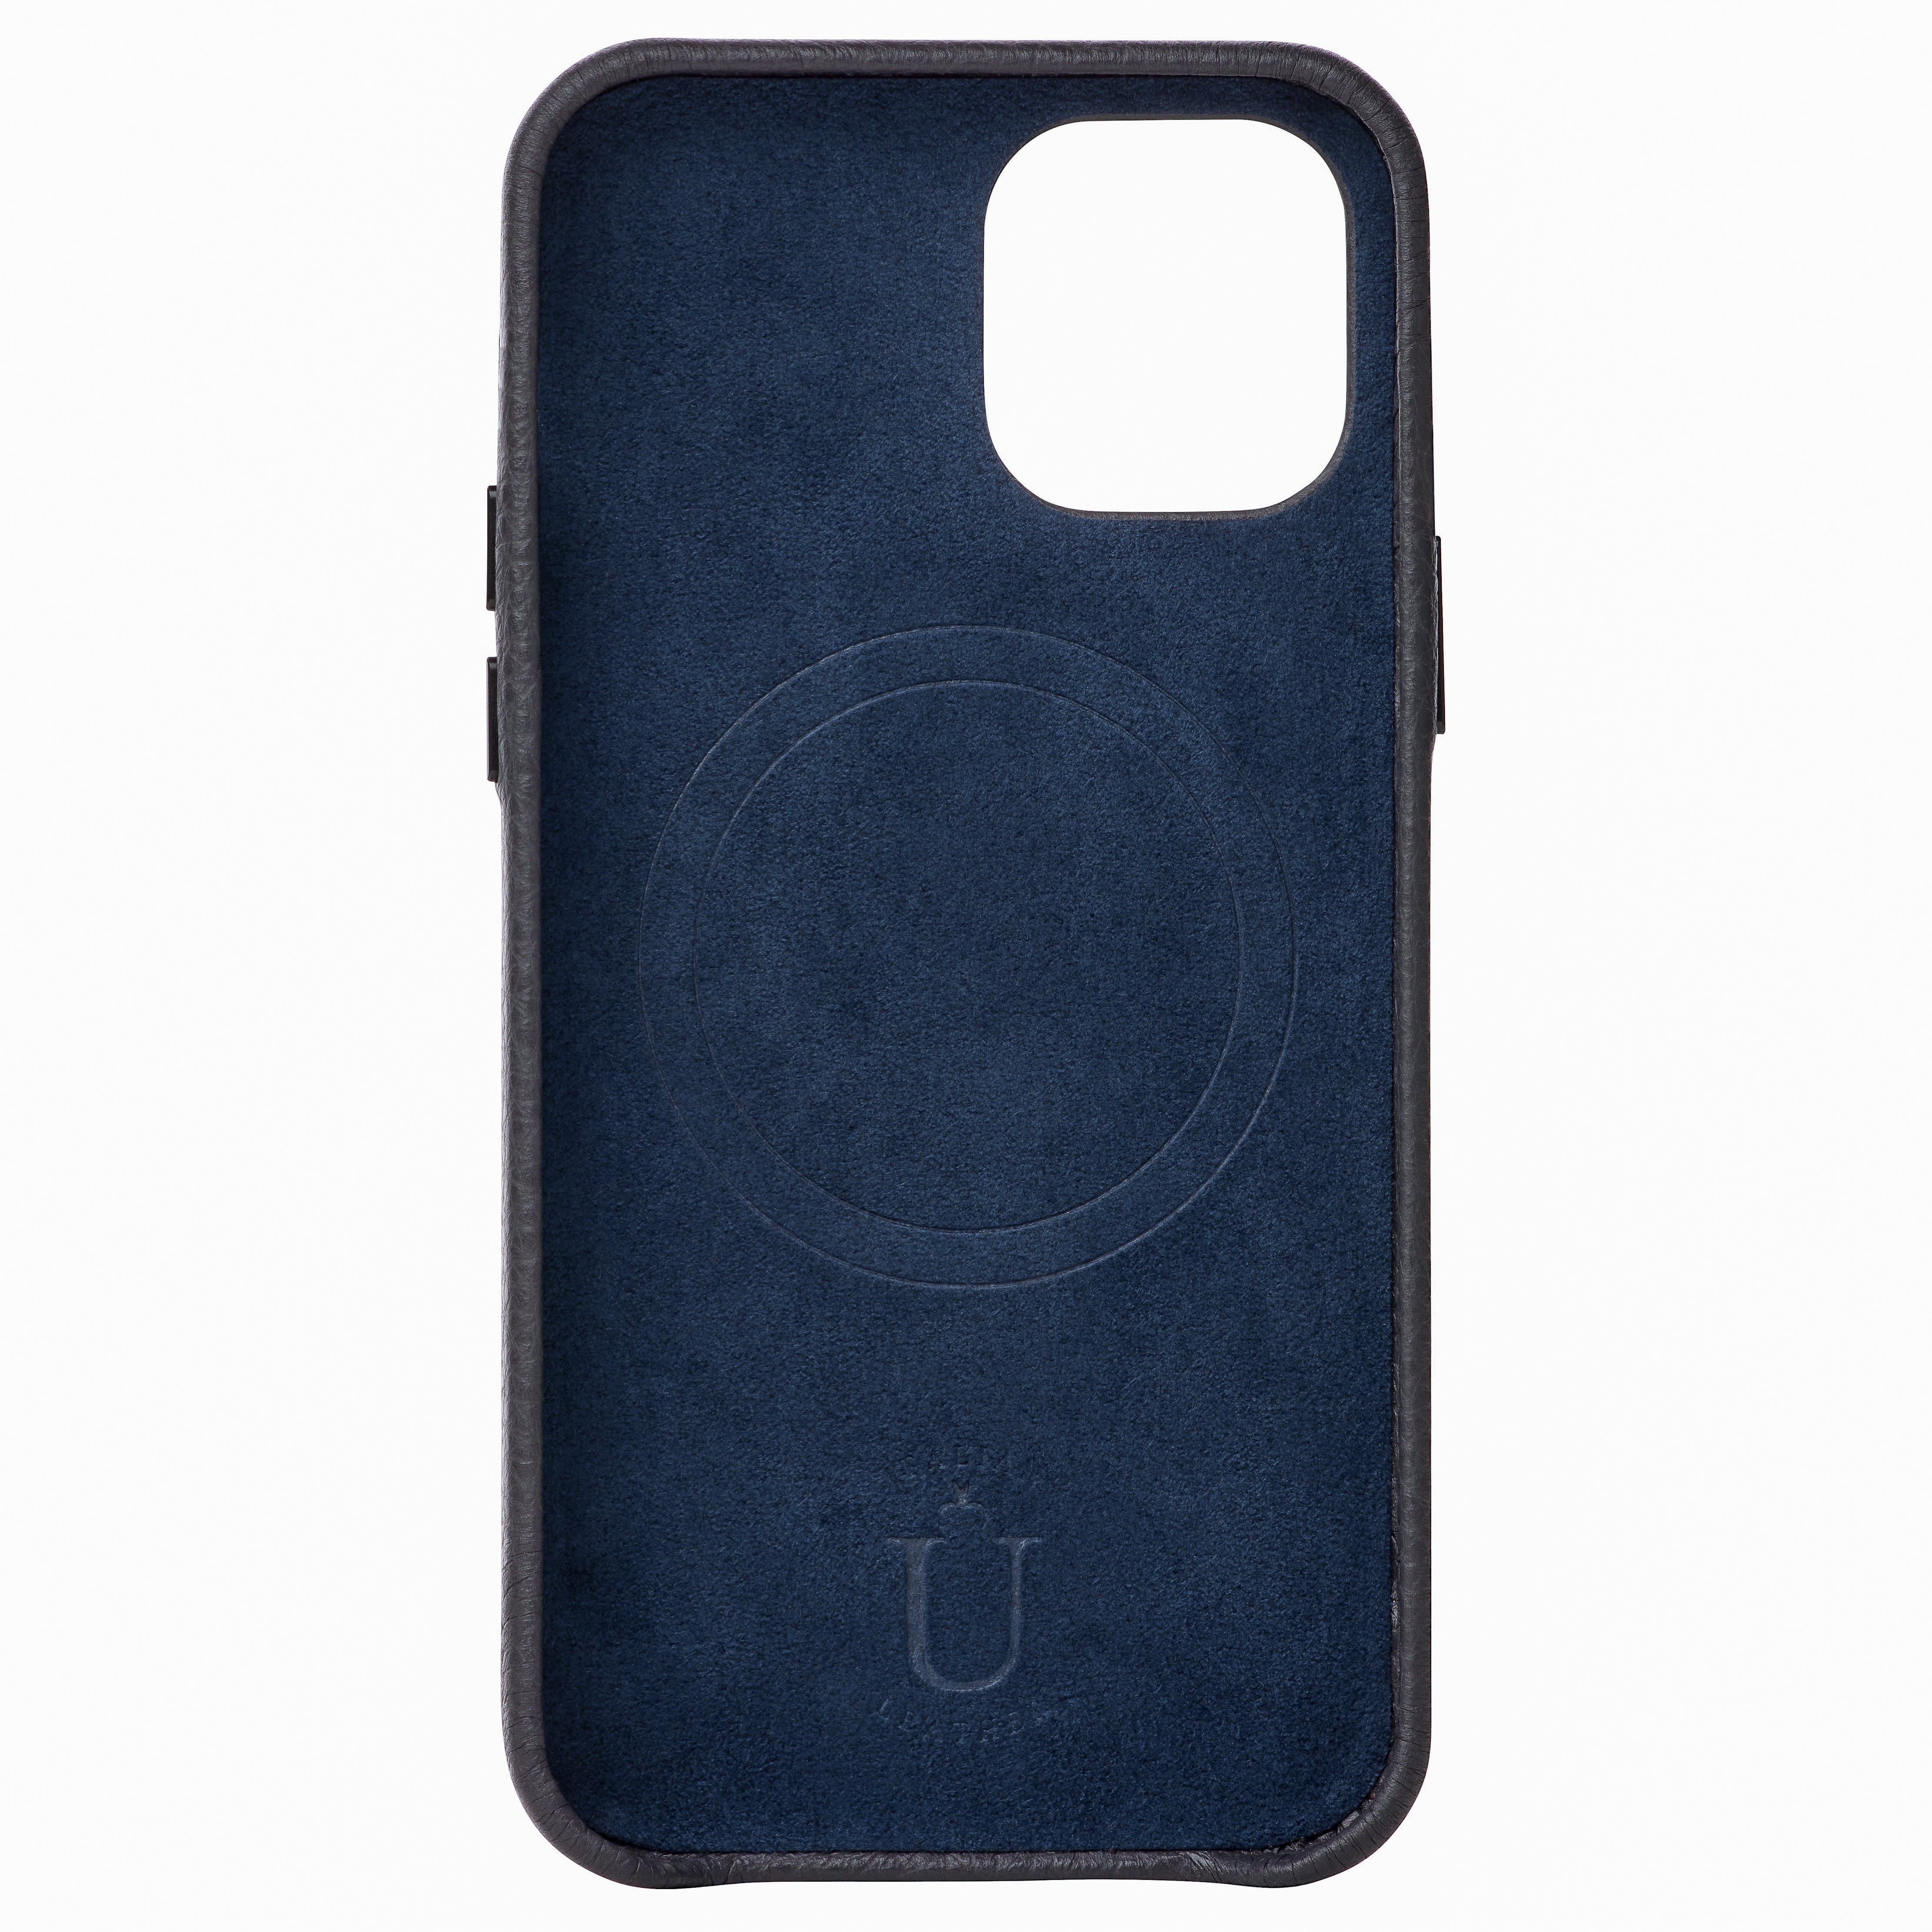 Ubique Italy Luxury iPhone Case 12 Pro Pebble Grain Leather Storm Grey Inner Lining